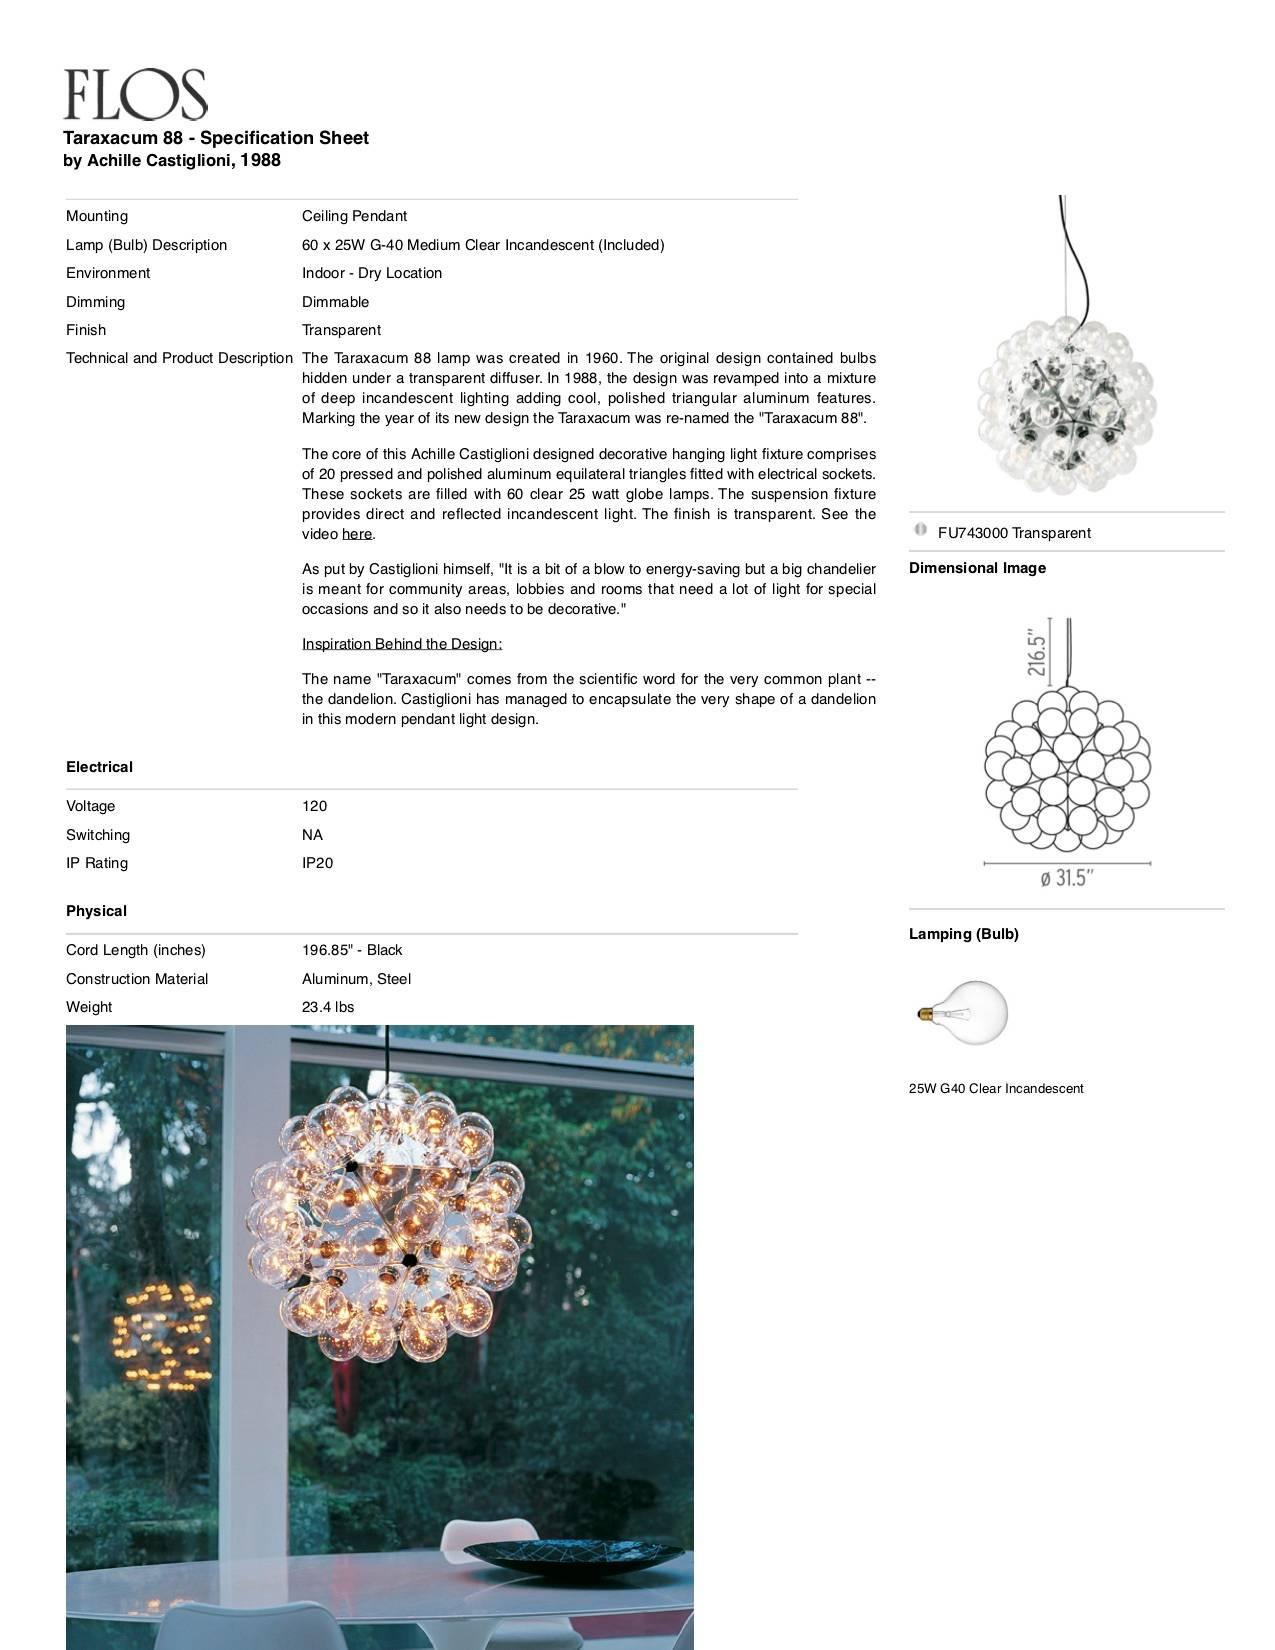 Contemporary FLOS Taraxacum 88 Pendant Light by Achille Castiglioni For Sale